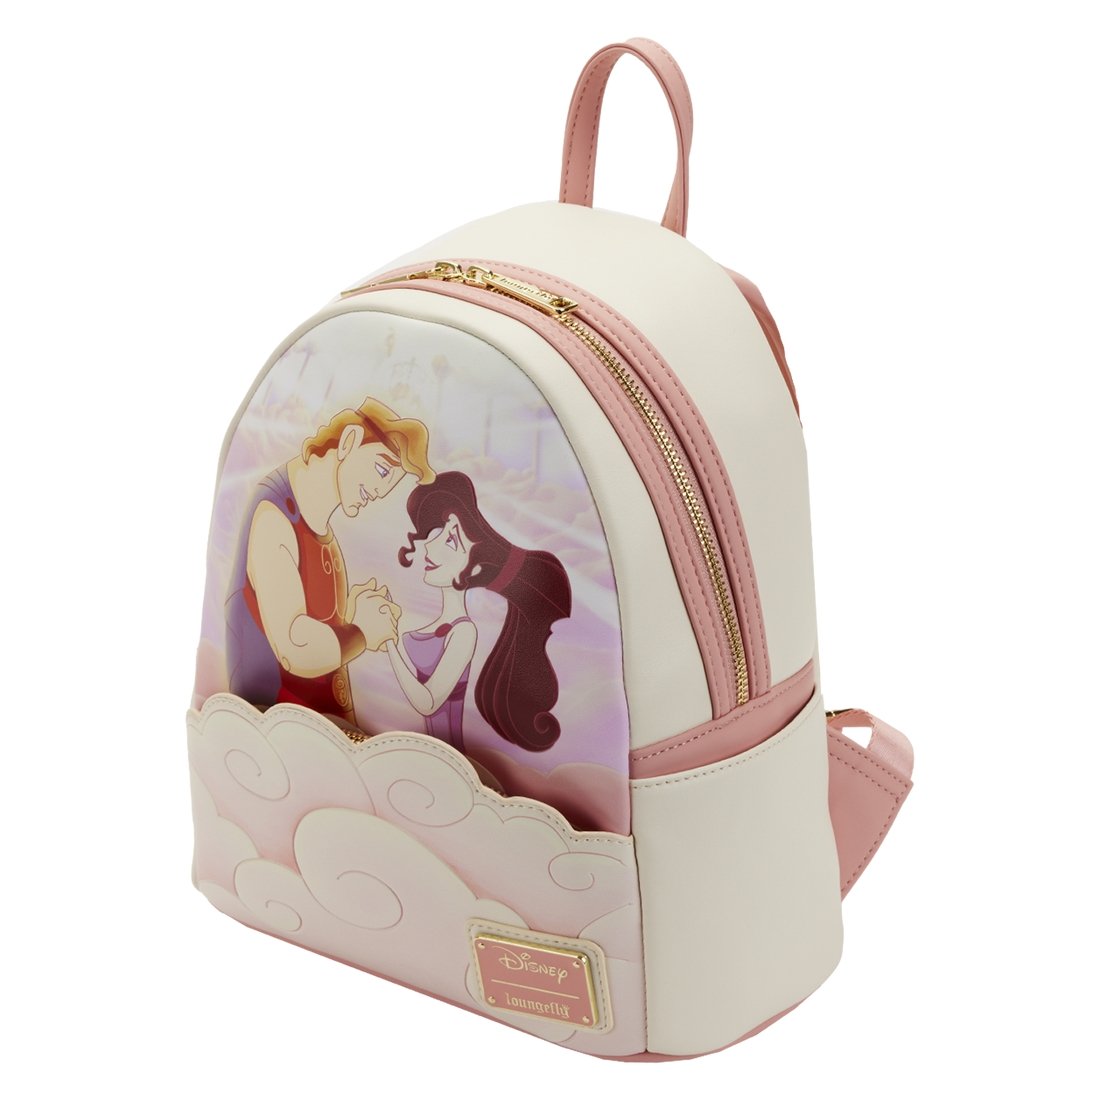 Meg & Hercules 25th Anniversary Mini Backpack - Rockamilly-Bags & Purses-Vintage